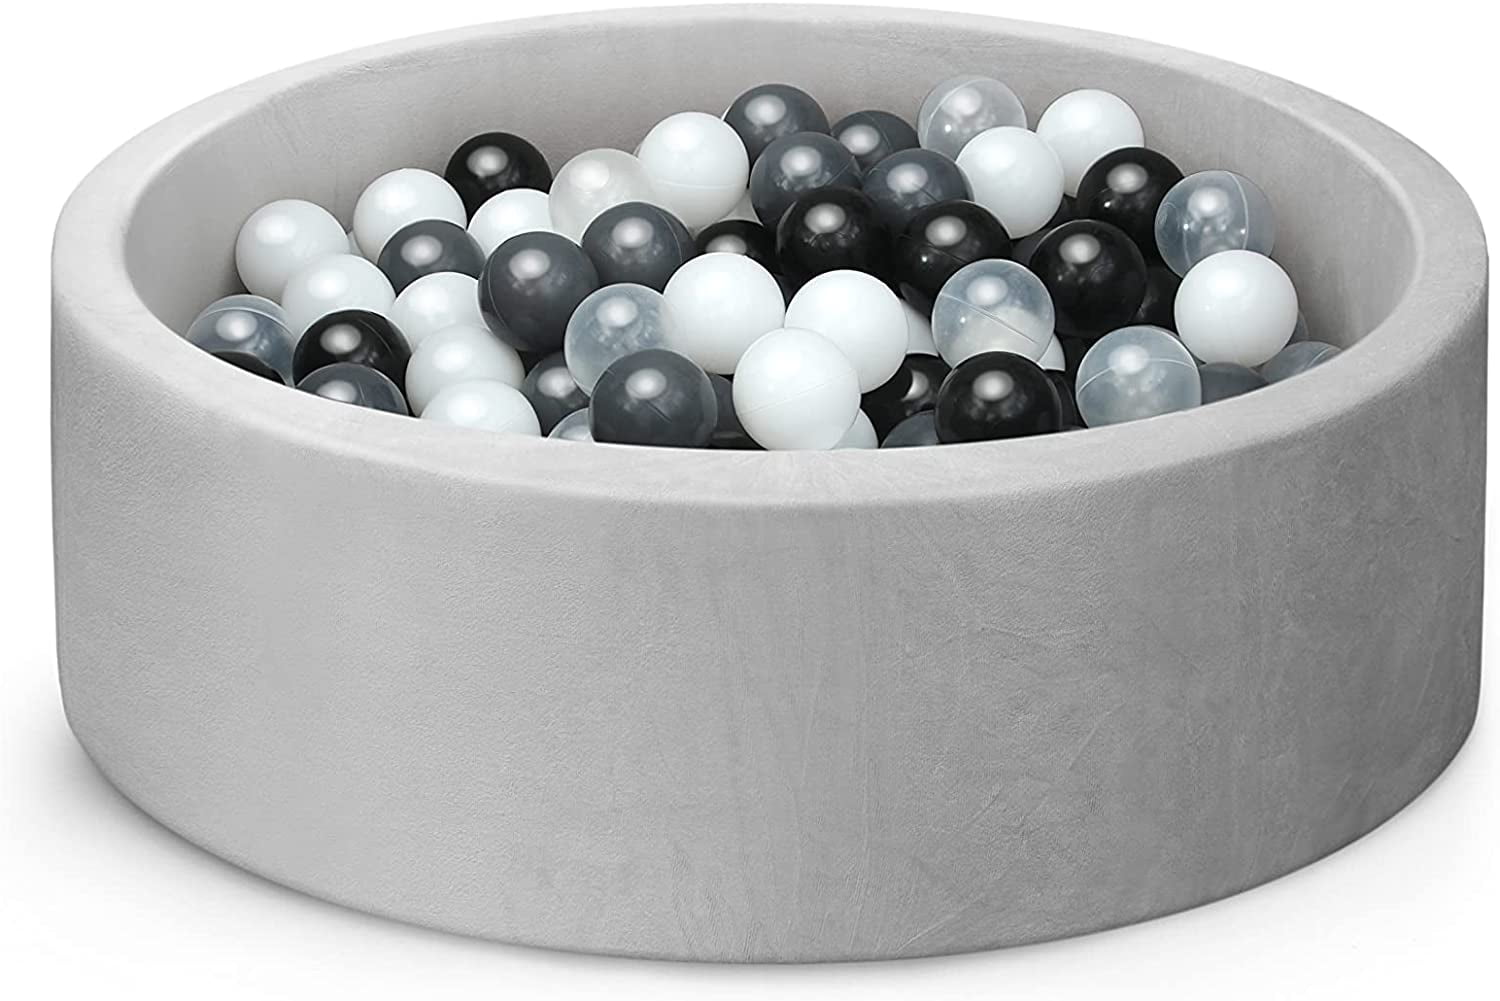 Grey Blue Silver Baby Kids Ball Pit Ball Pool Foam padding Play 200 balls TOY UK 